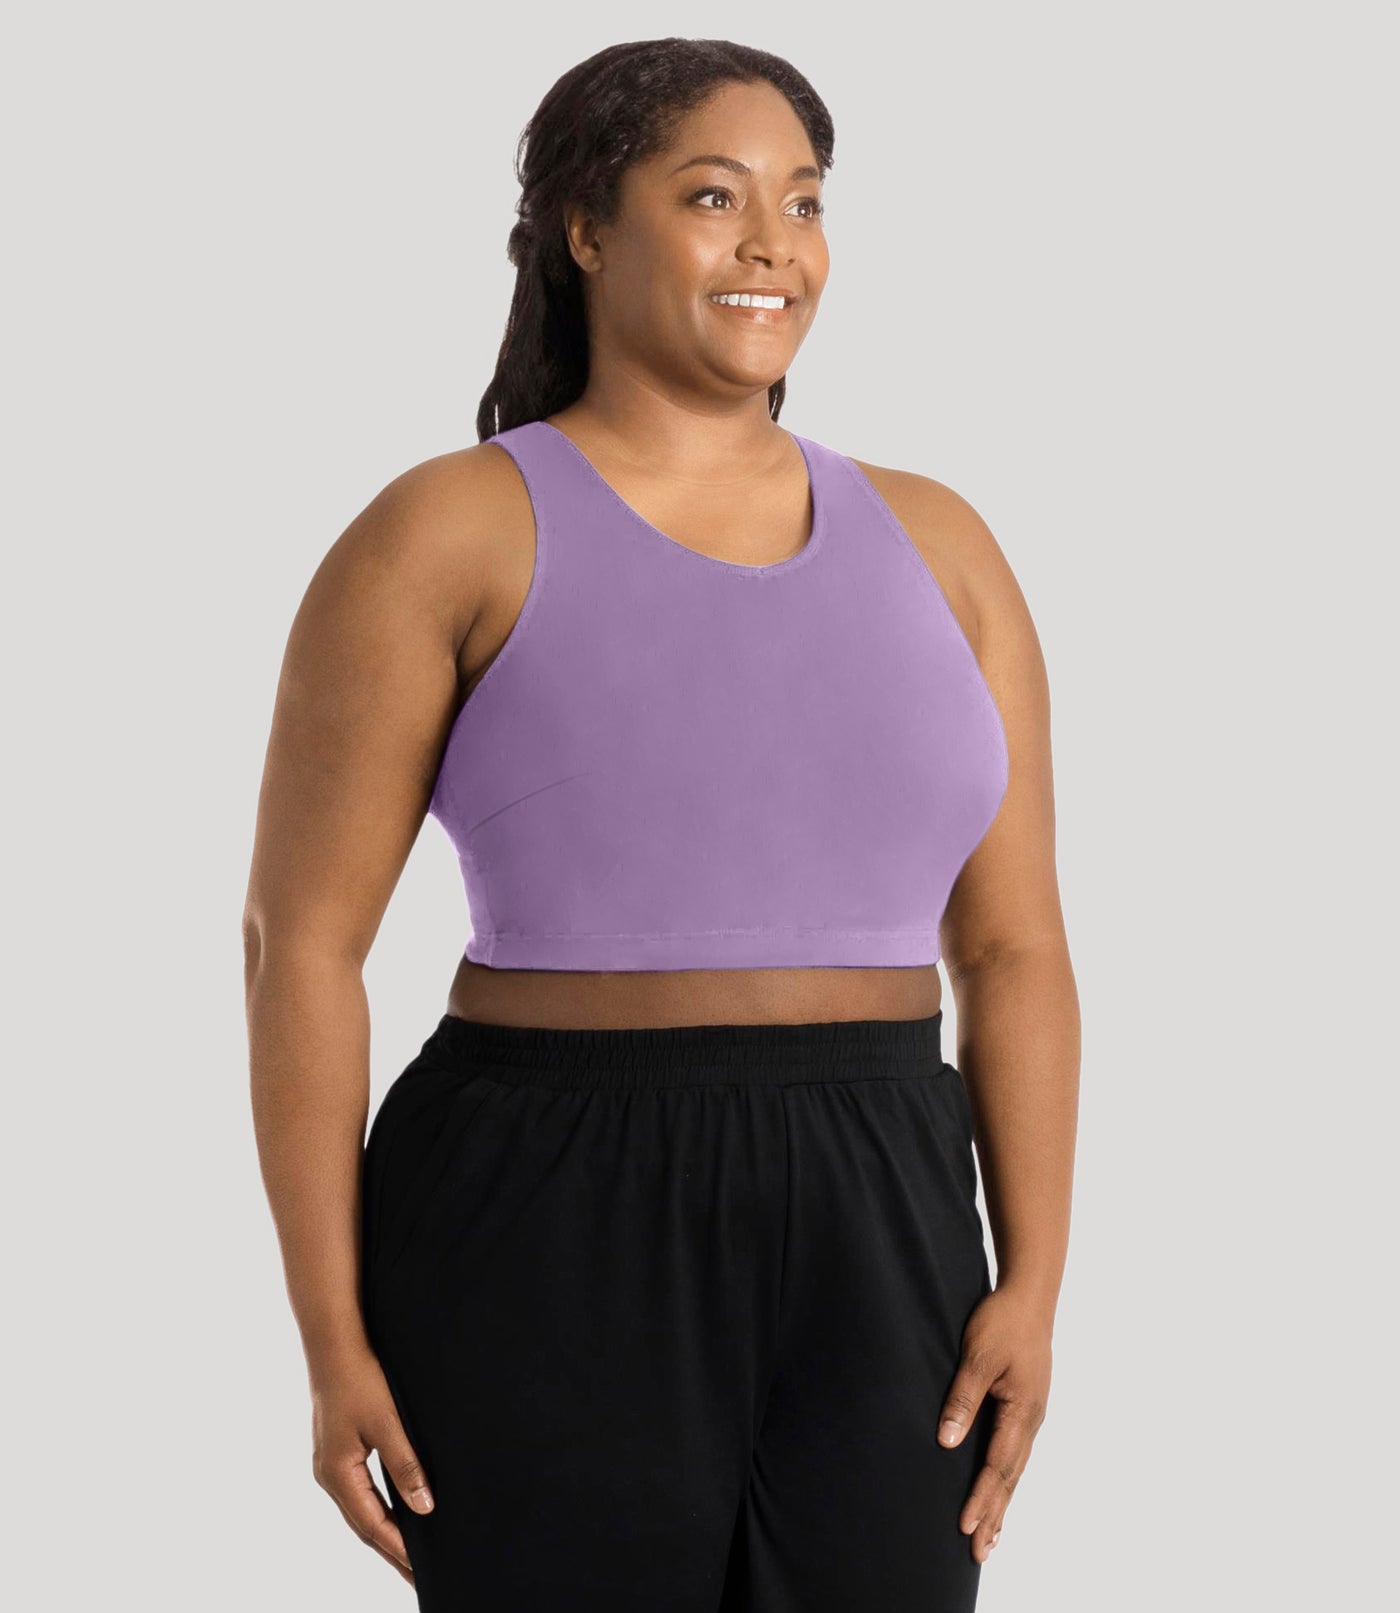 Plus size model, facing front, wearing stretch naturals full fit V-neck bra in color lavender.